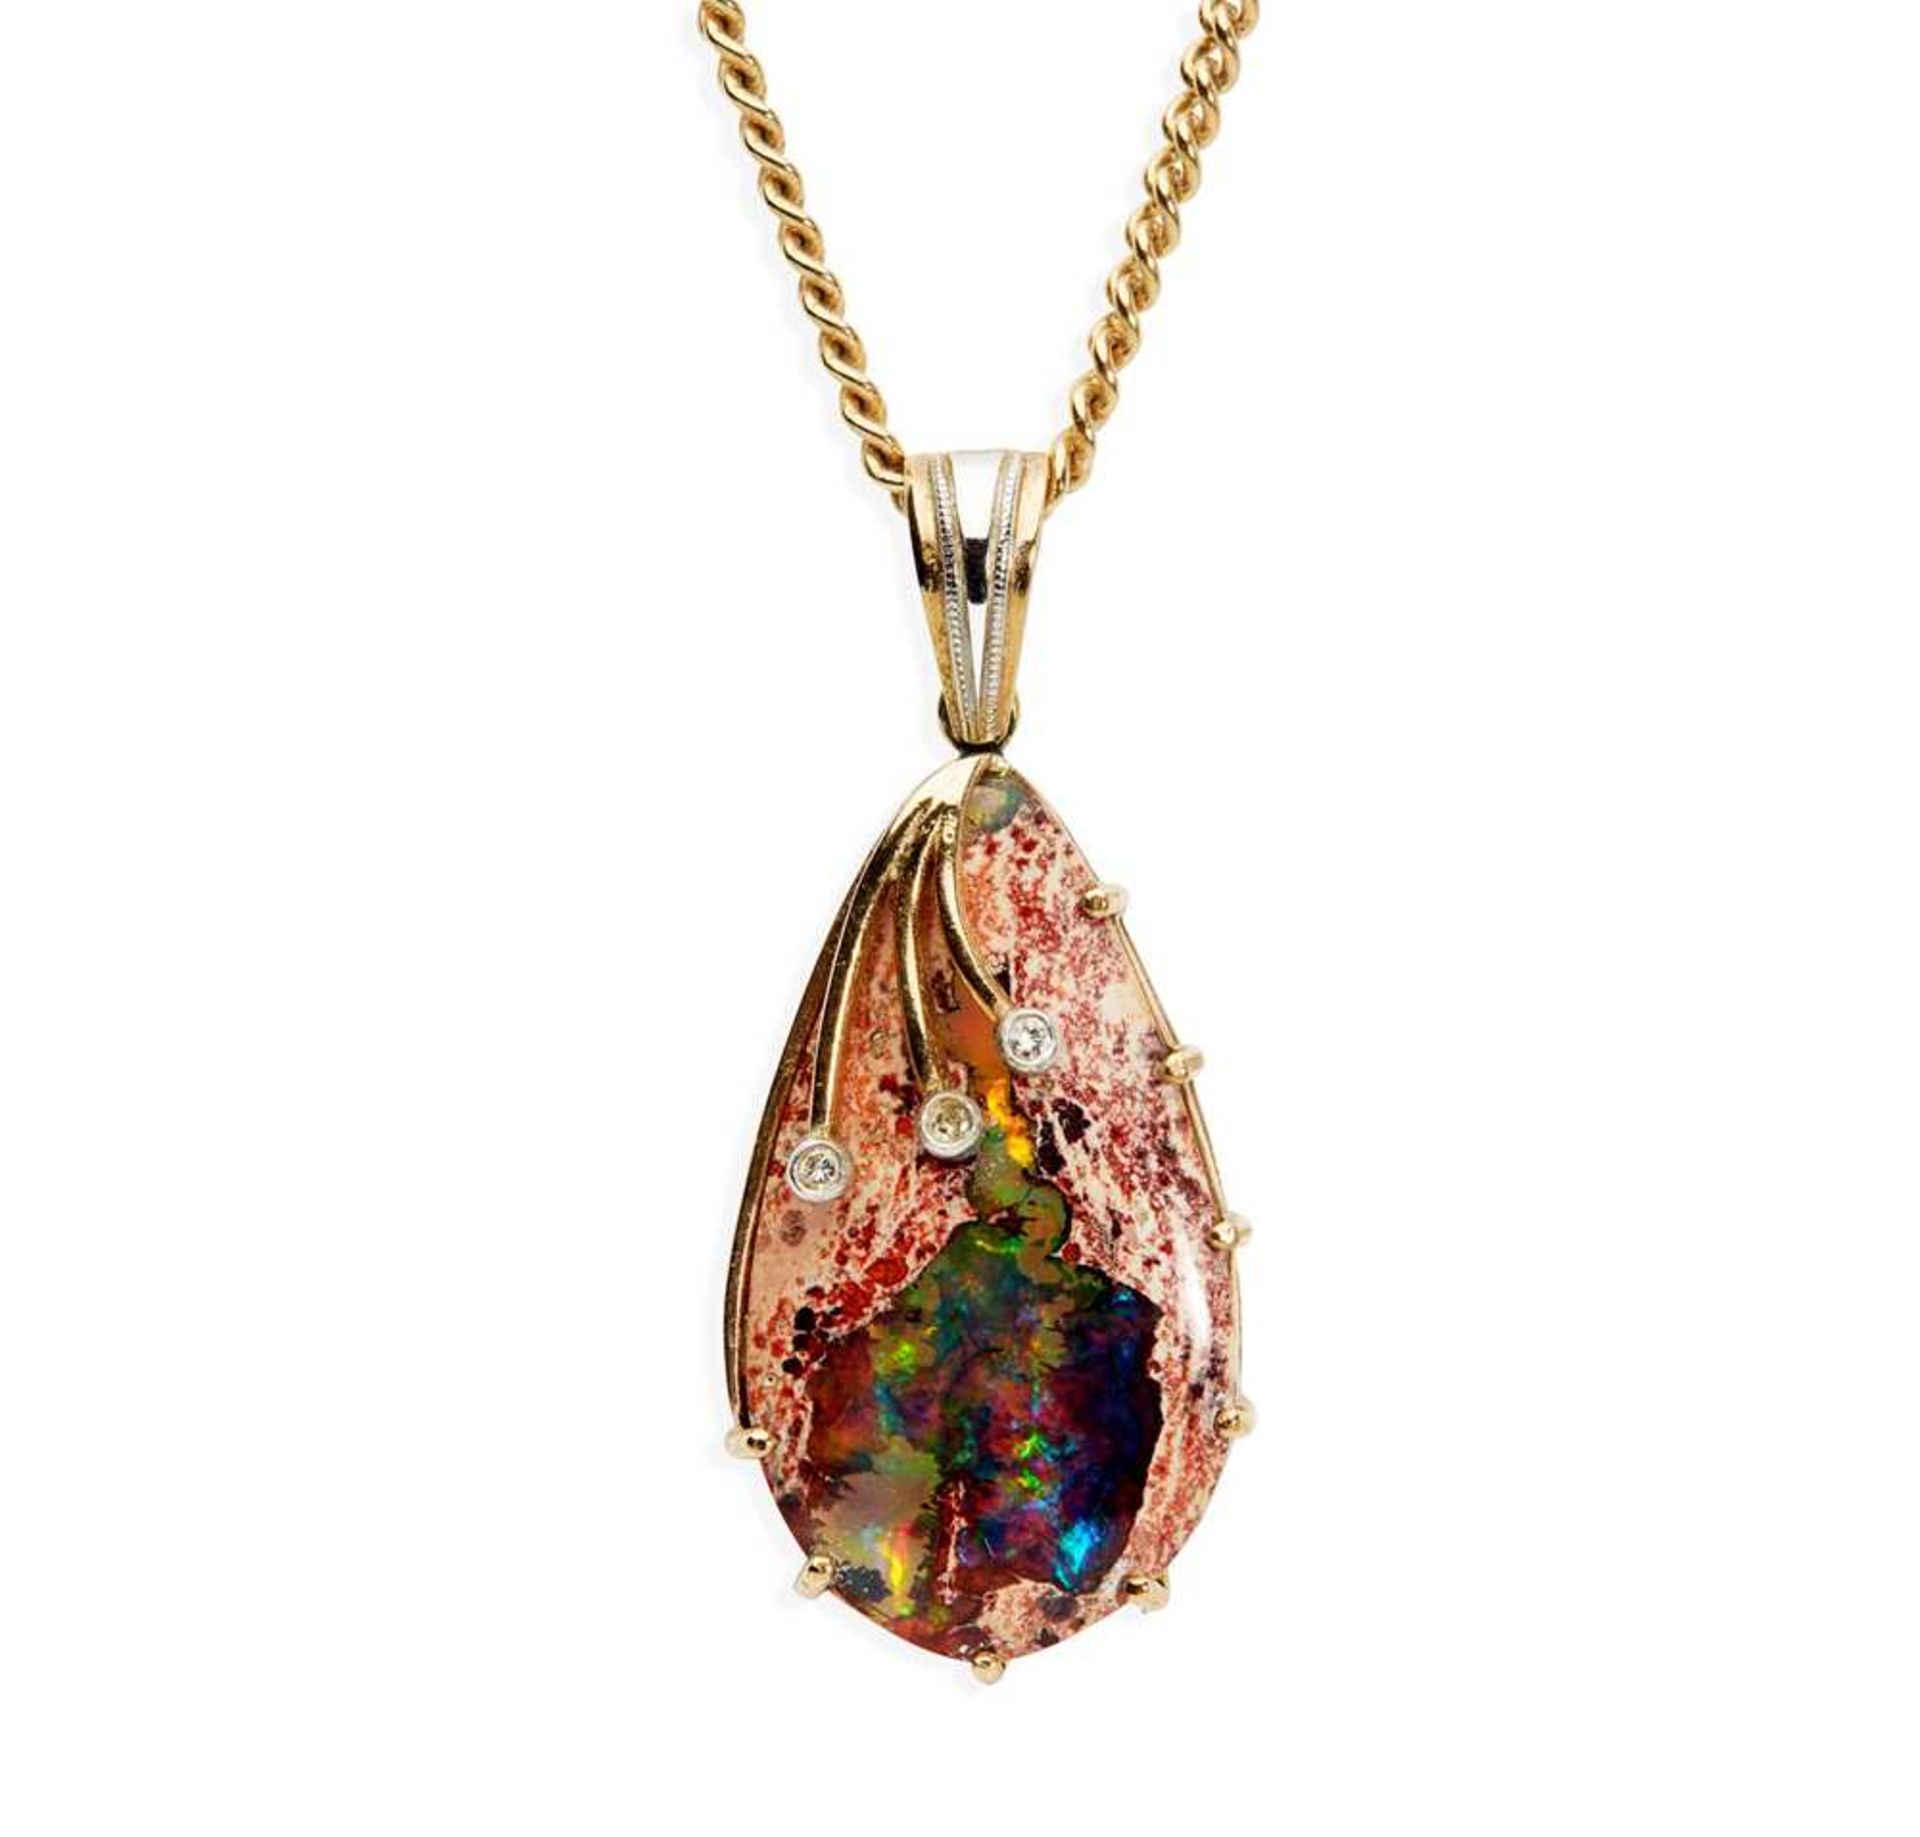 A boulder opal and diamond pendant